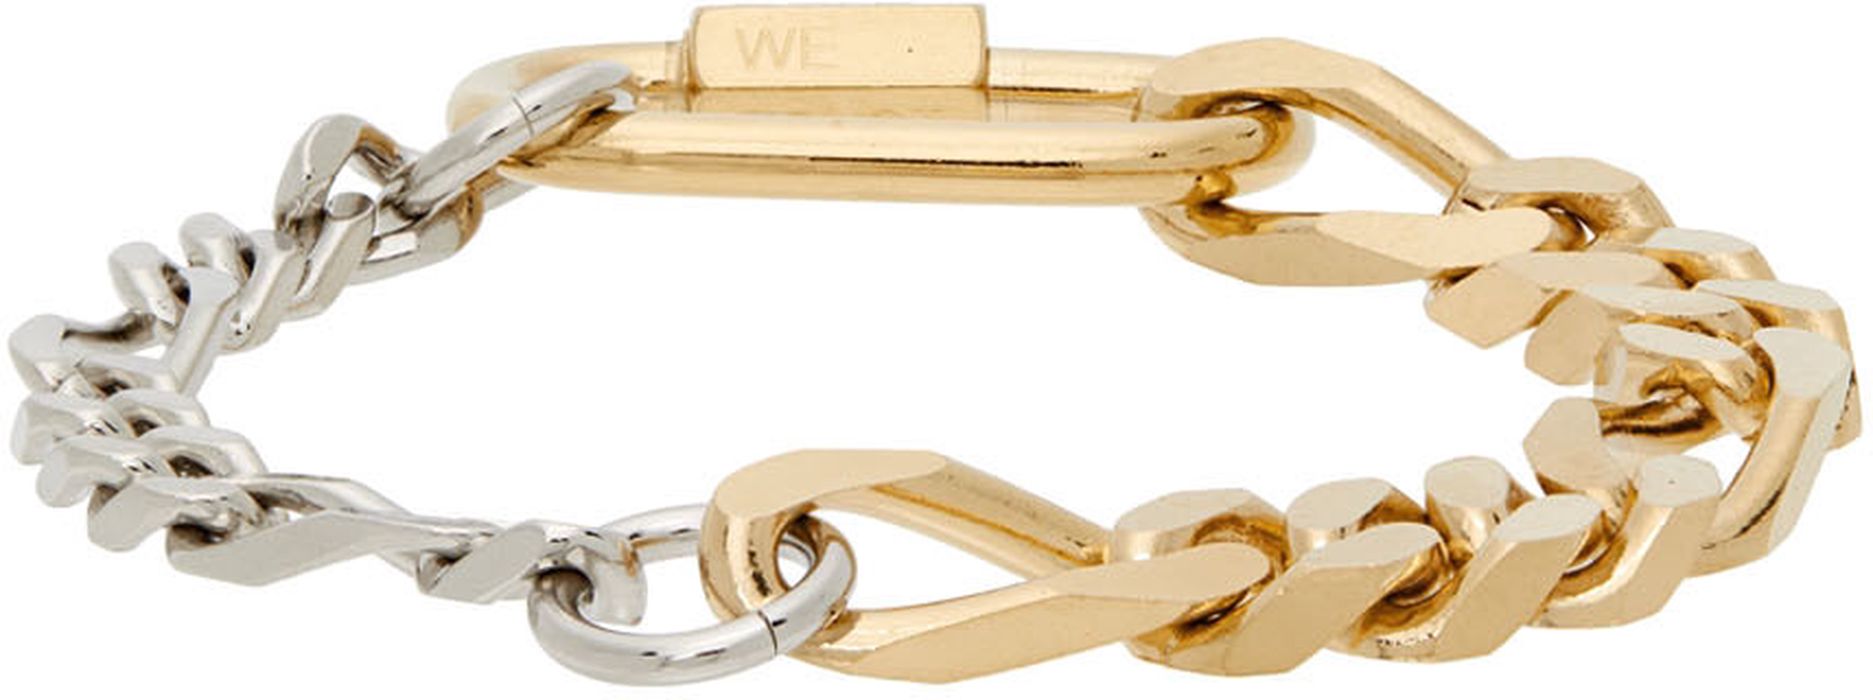 IN GOLD WE TRUST PARIS Gold & Silver Curb Chain Bracelet